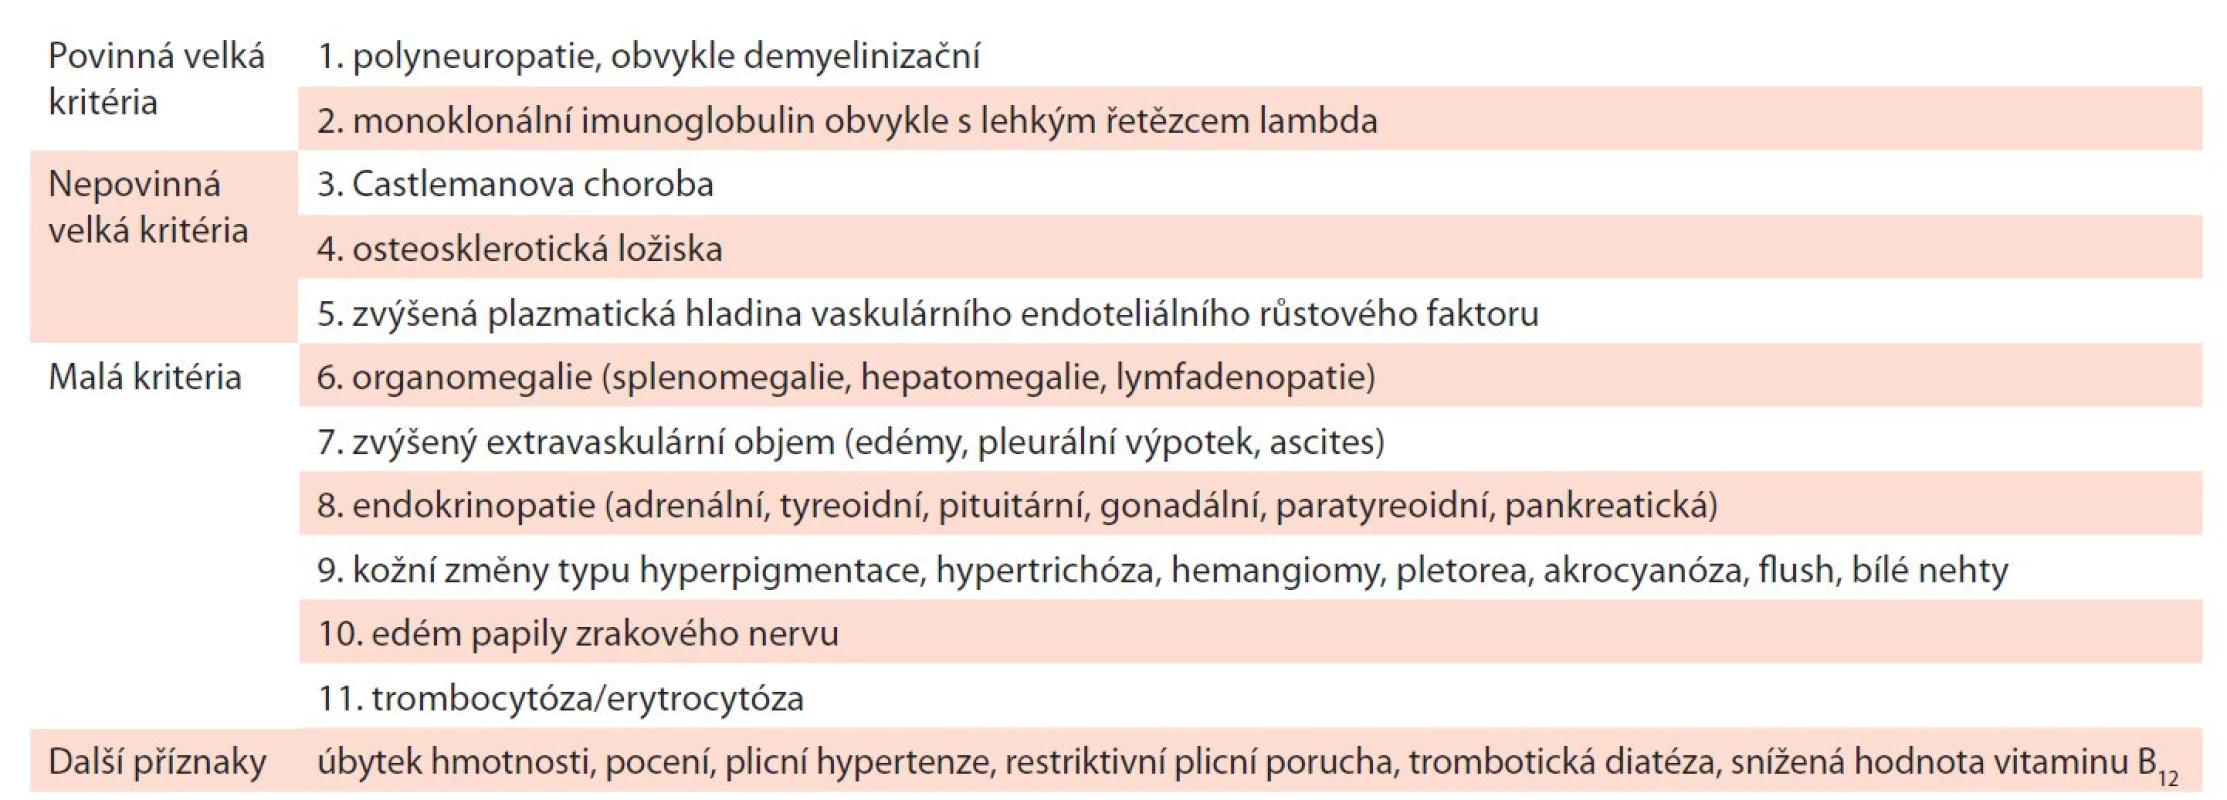 Kritéria POEMS syndromu publikovaná v roce 2019 [29].